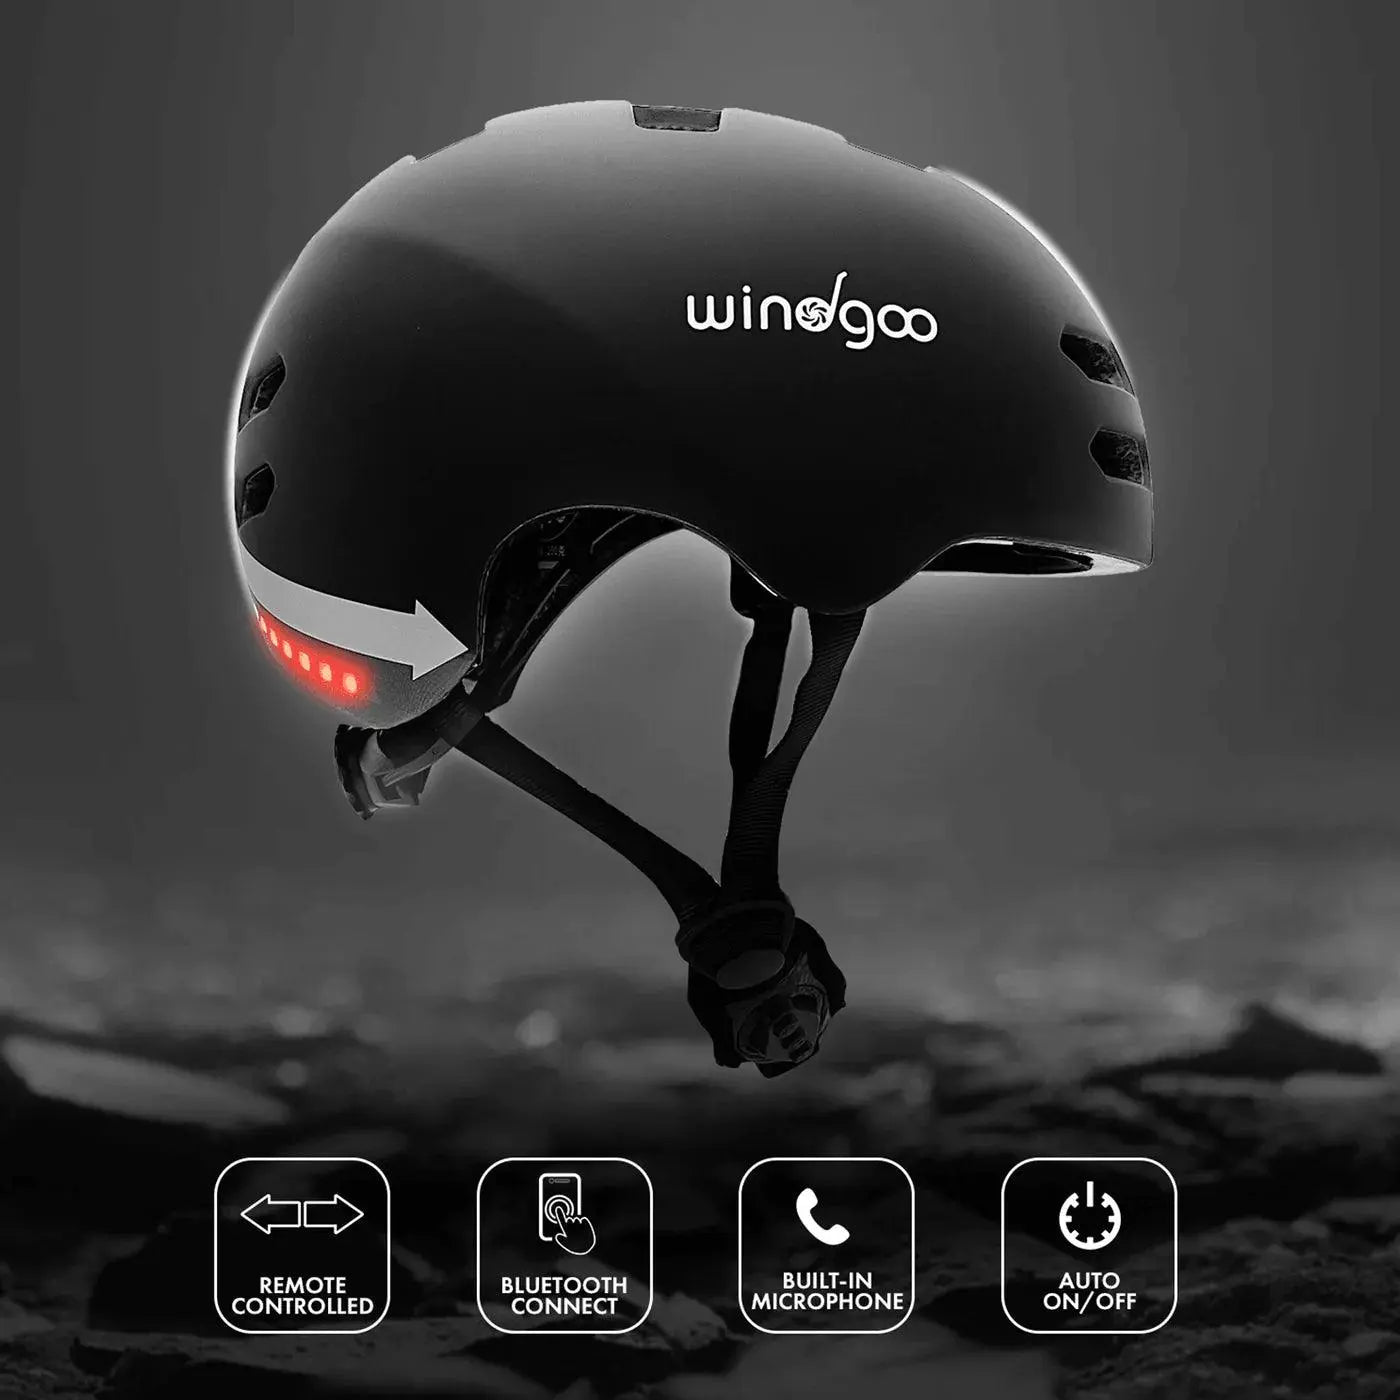 Windgoo Helm H1